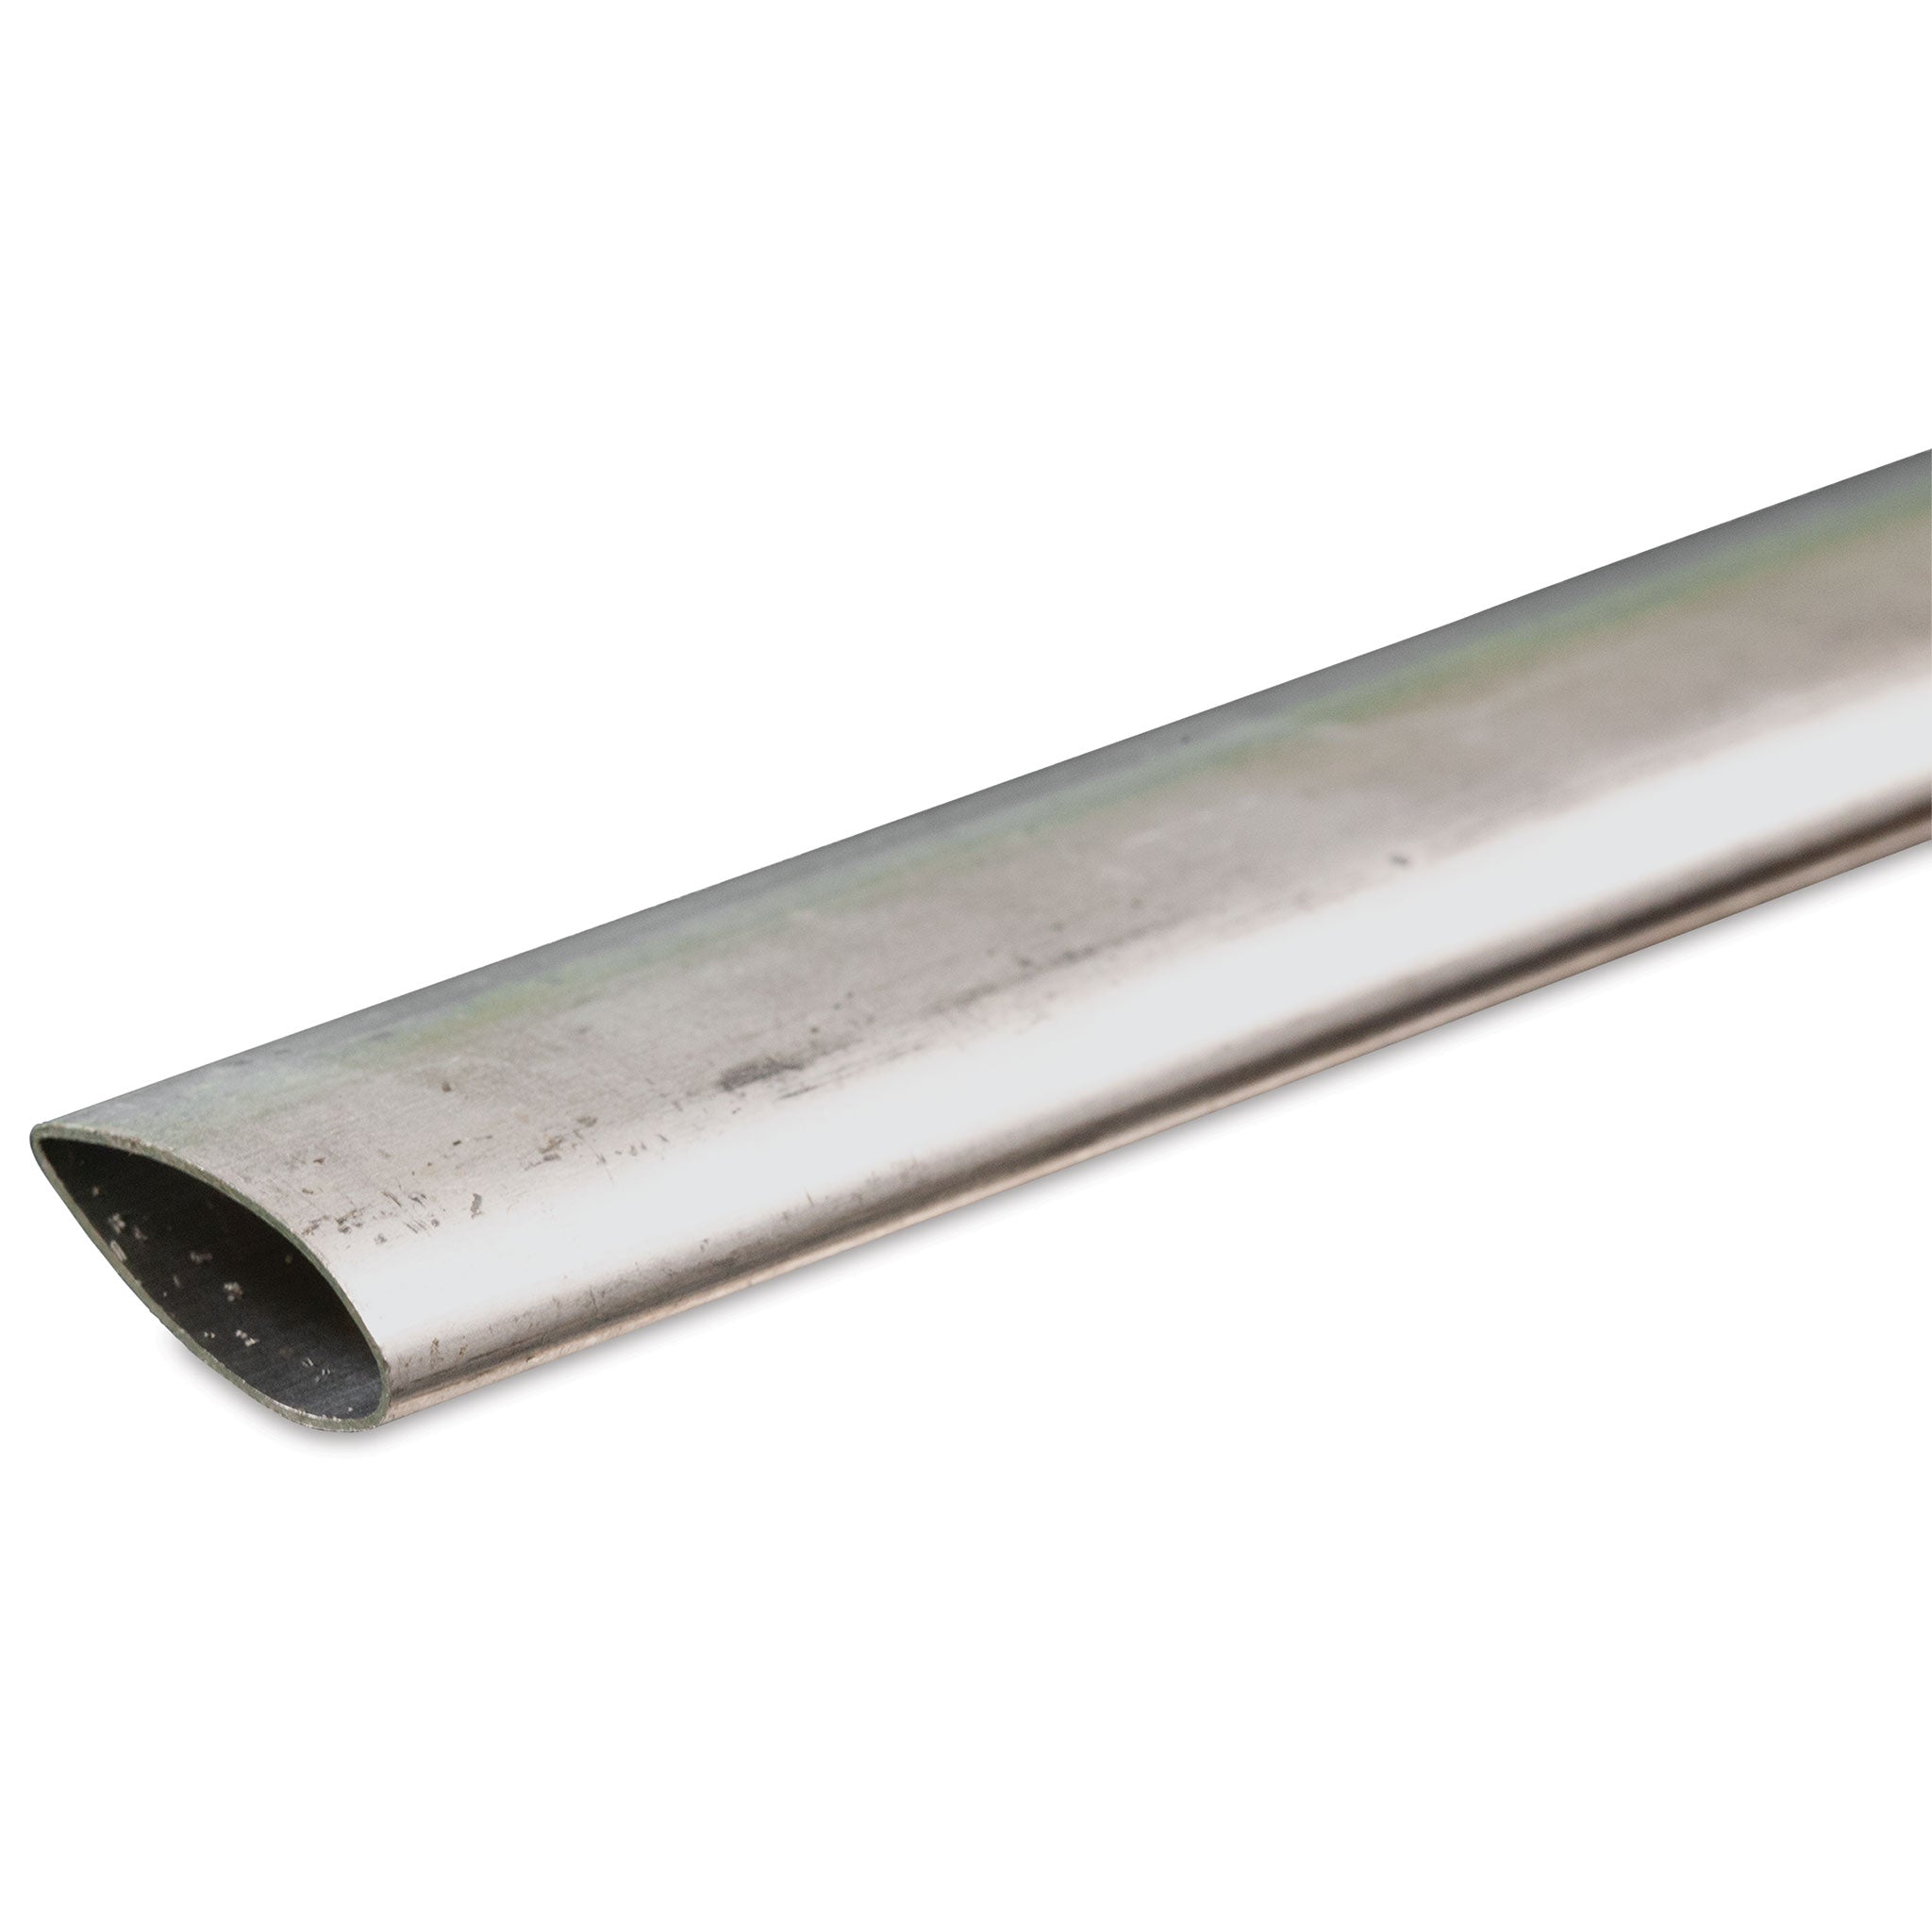 K&S Metals 1105 Aluminum Streamline Tube 3/4" OD x 0.016" Wall x 35" Long (1 Piece)